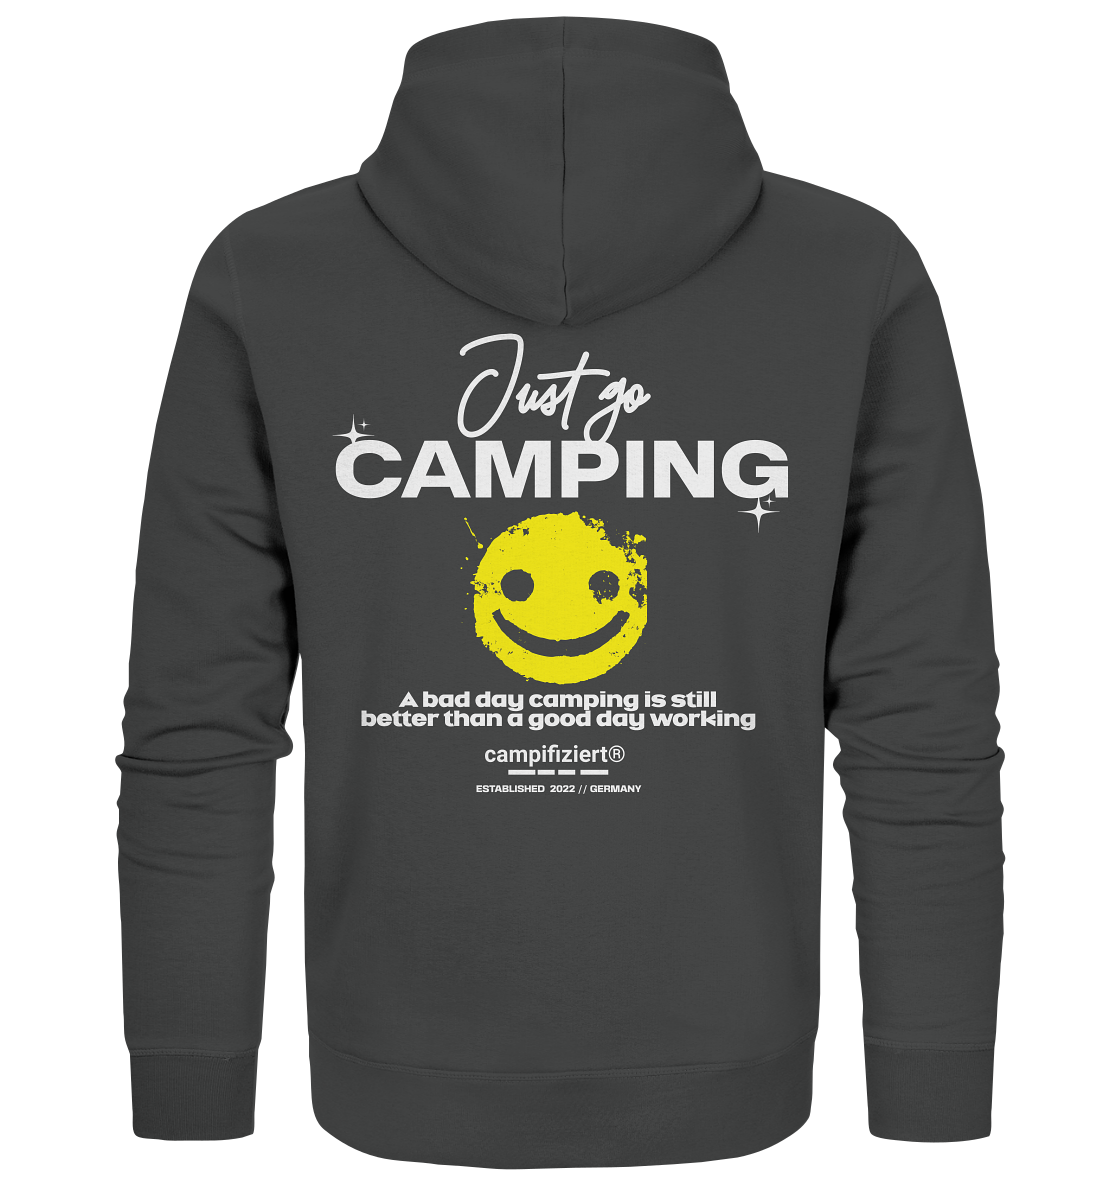 campifiziert® - Just go camping - Organic Zipper